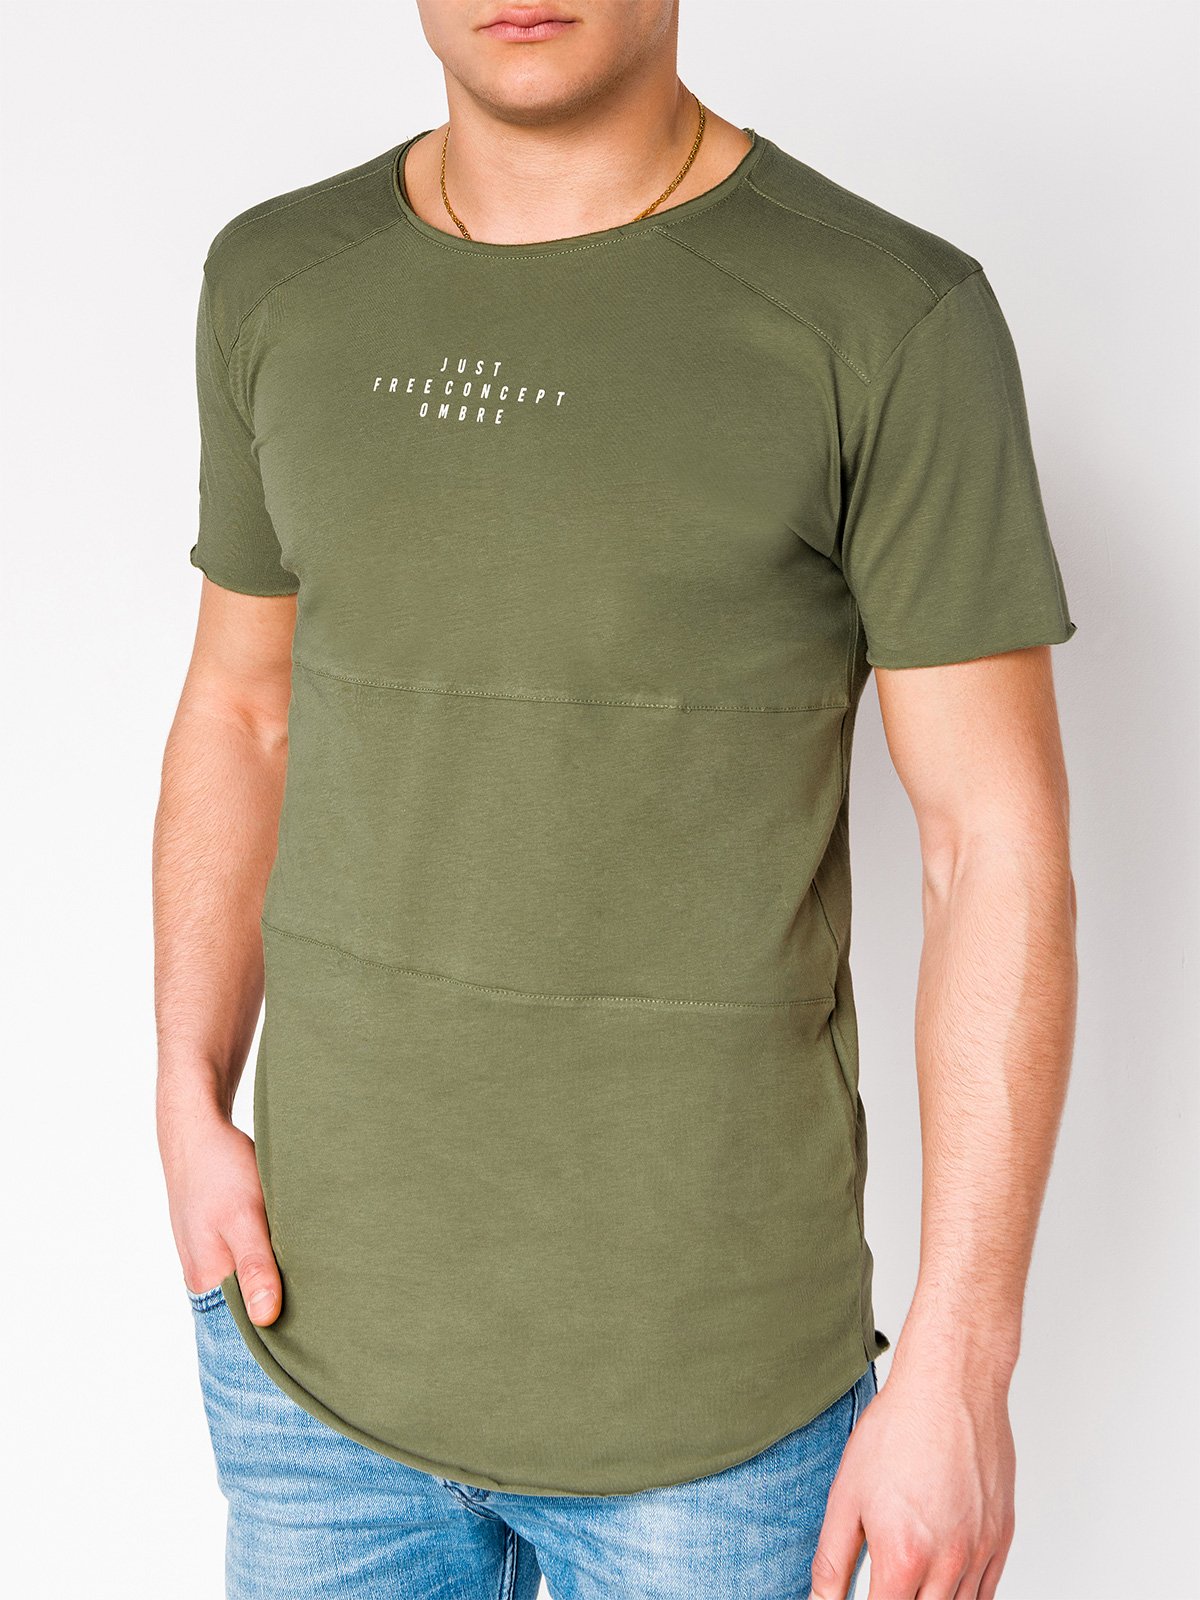 Men's printed t-shirt S950 - khaki | MODONE wholesale - Clothing For Men